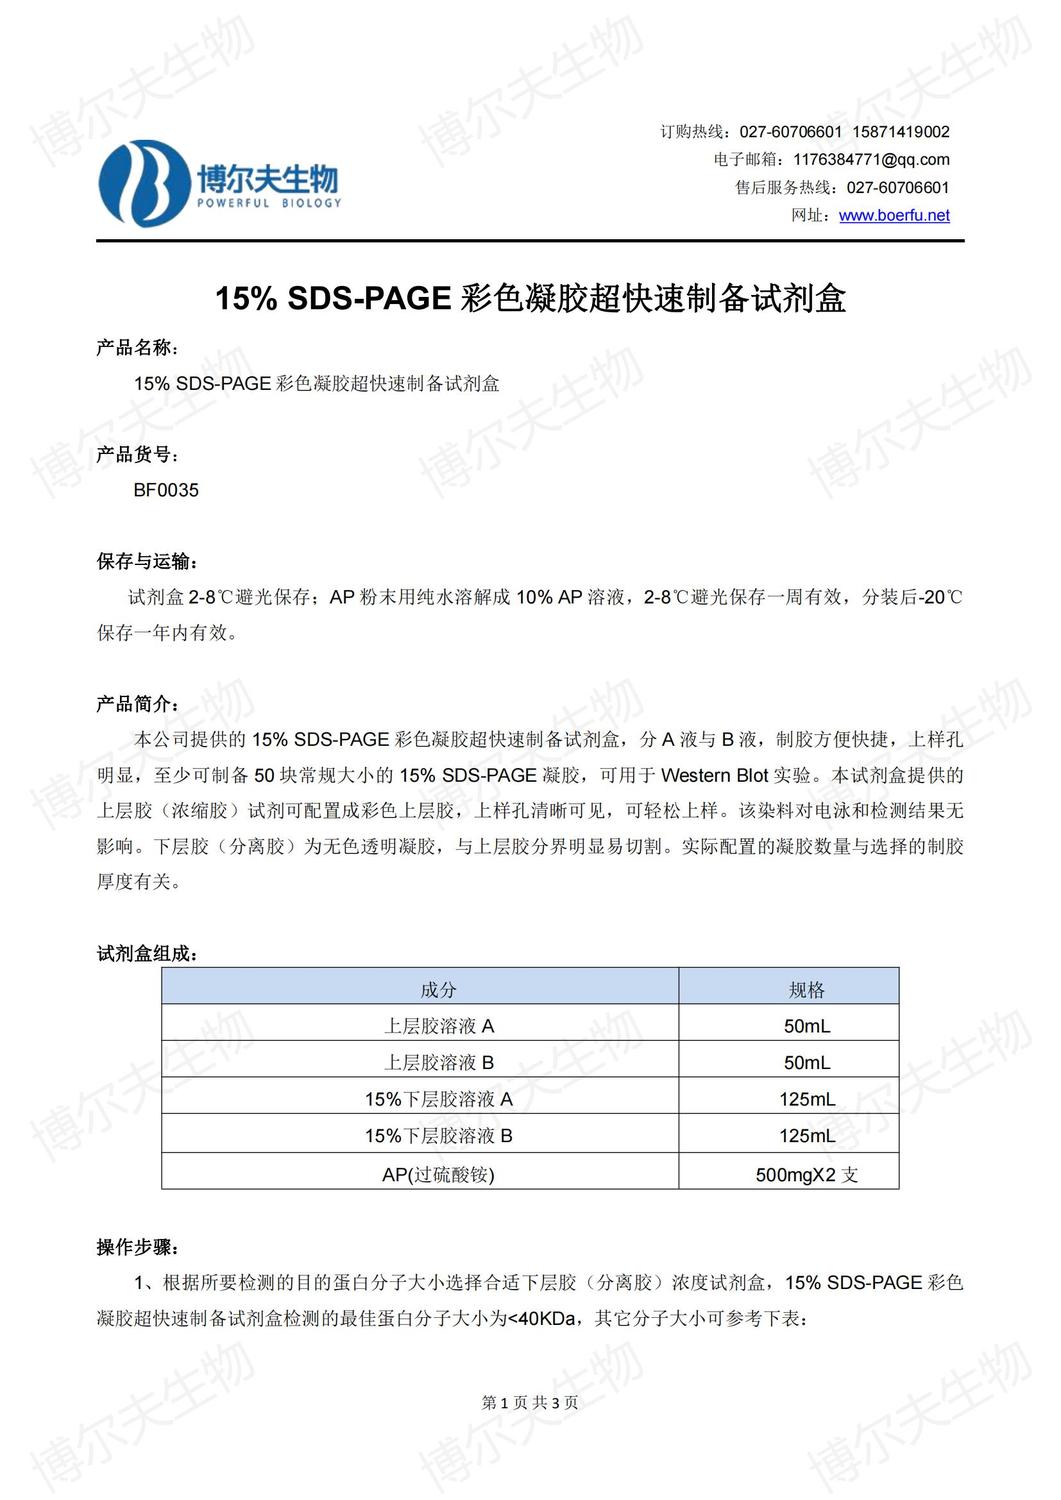 15%SDS-PAGE凝膠快速制備試劑盒說明書20221010版_00.jpg